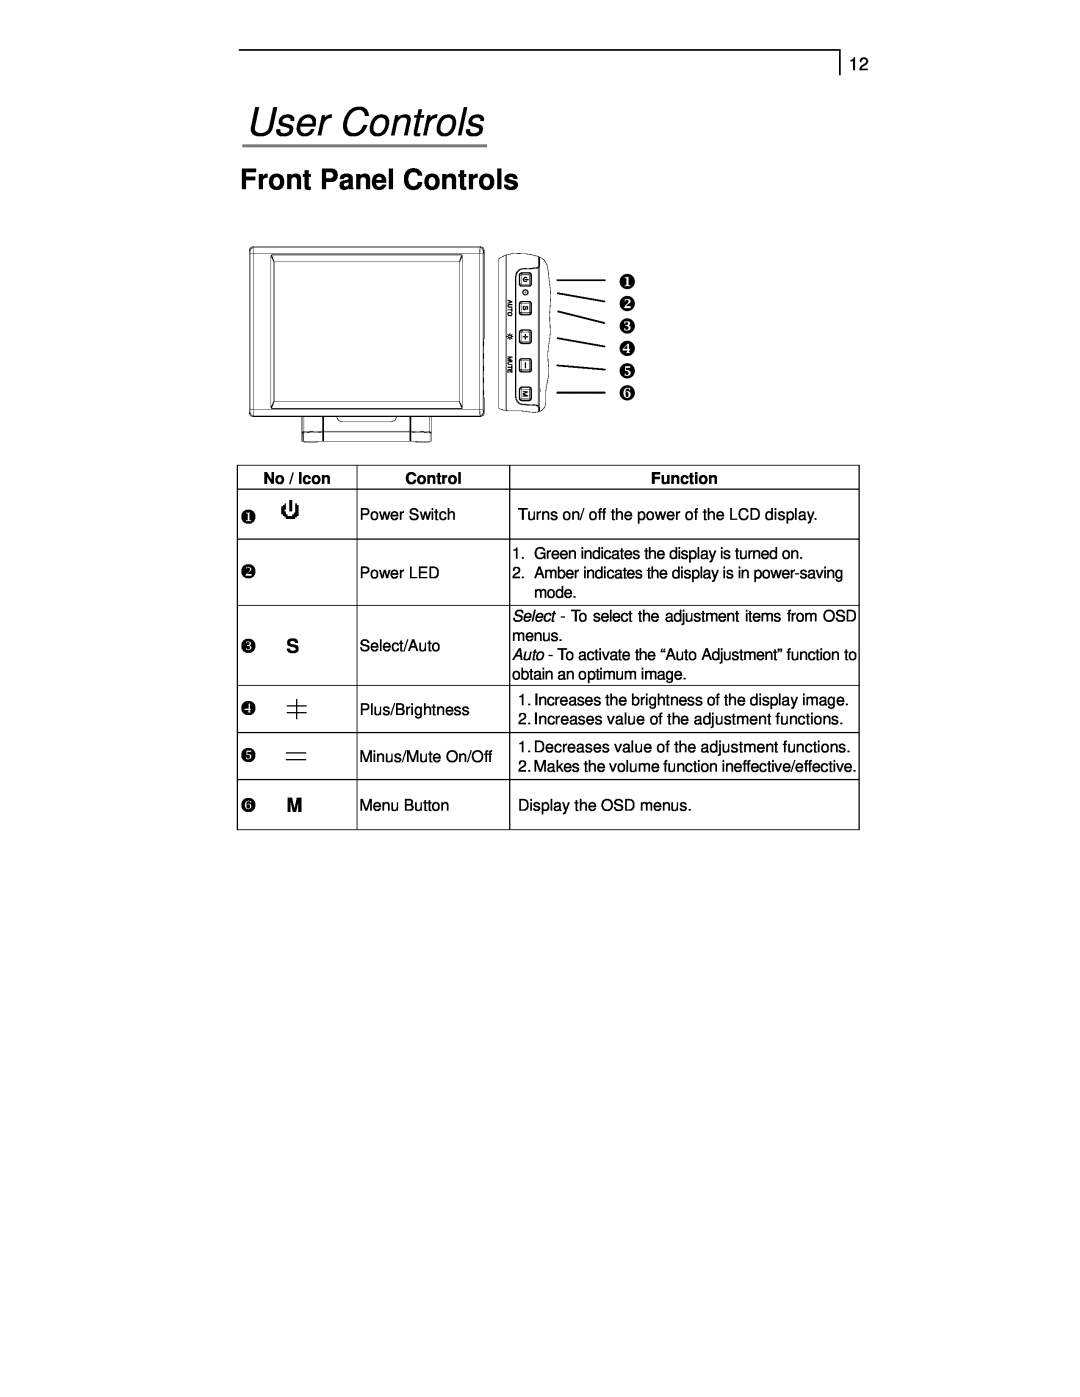 Planar PT1520MU manual User Controls, Front Panel Controls, No / Icon, Function 